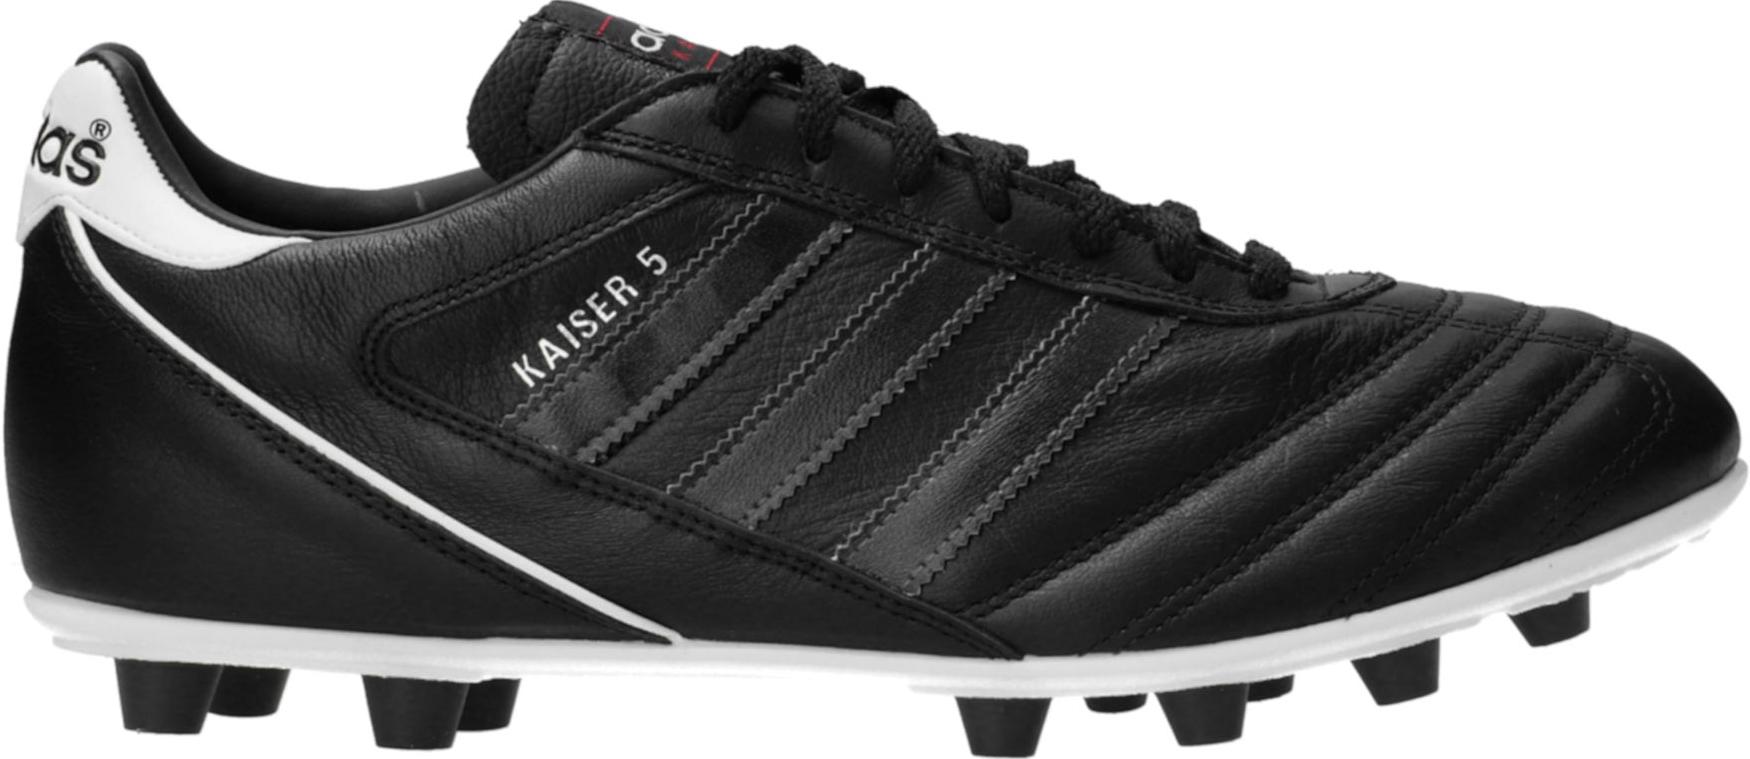 Kopačke adidas Kaiser 5 Liga FG Black Stripes Schwarz